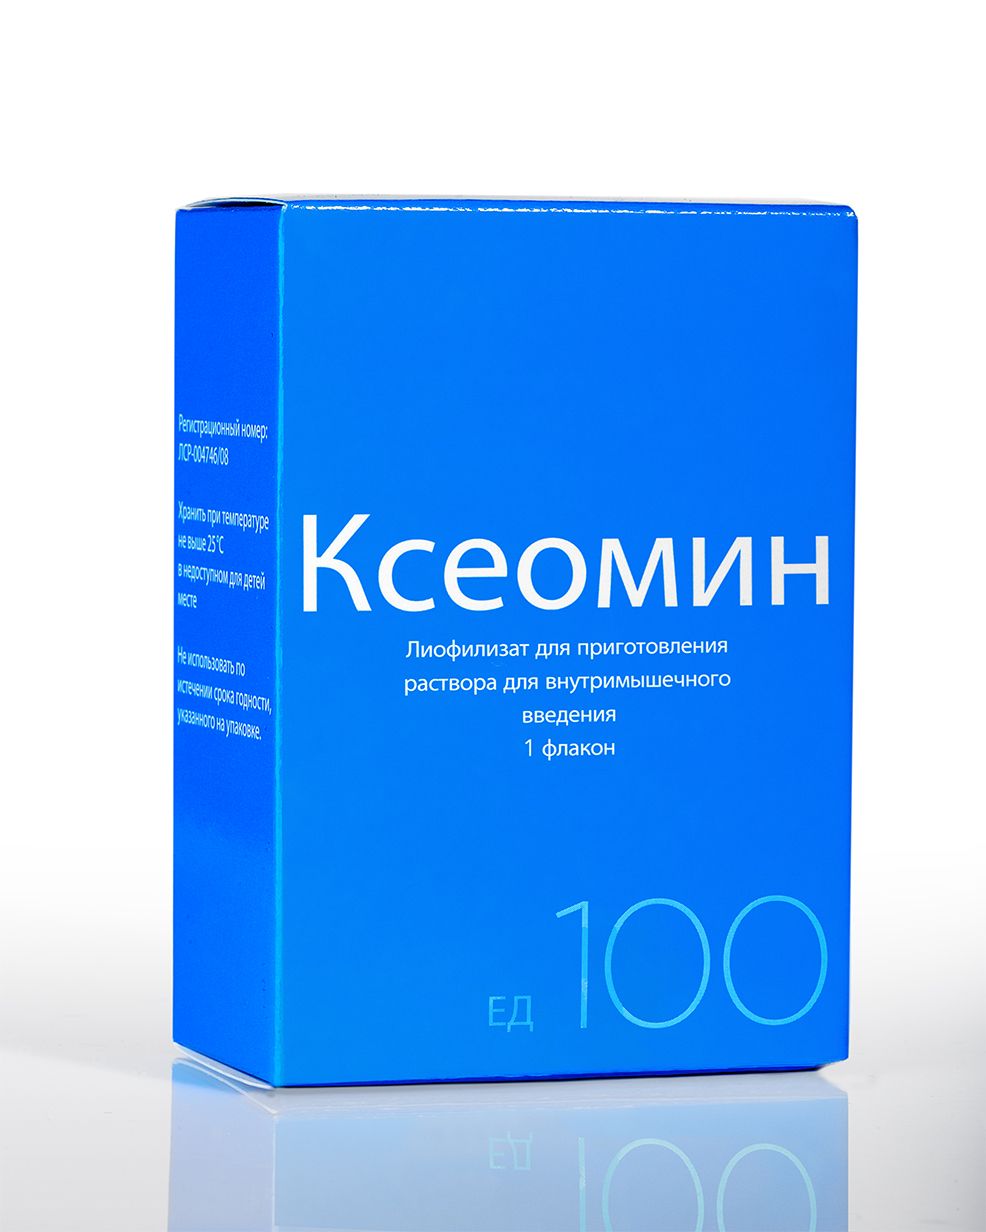 Ксеомин лоб. Ксеомин 100 ед. Лиофилизат Ксеомин 100 ед. Ксеомин 50 и 100. Ботулинический Токсин типа а Ксеомин.